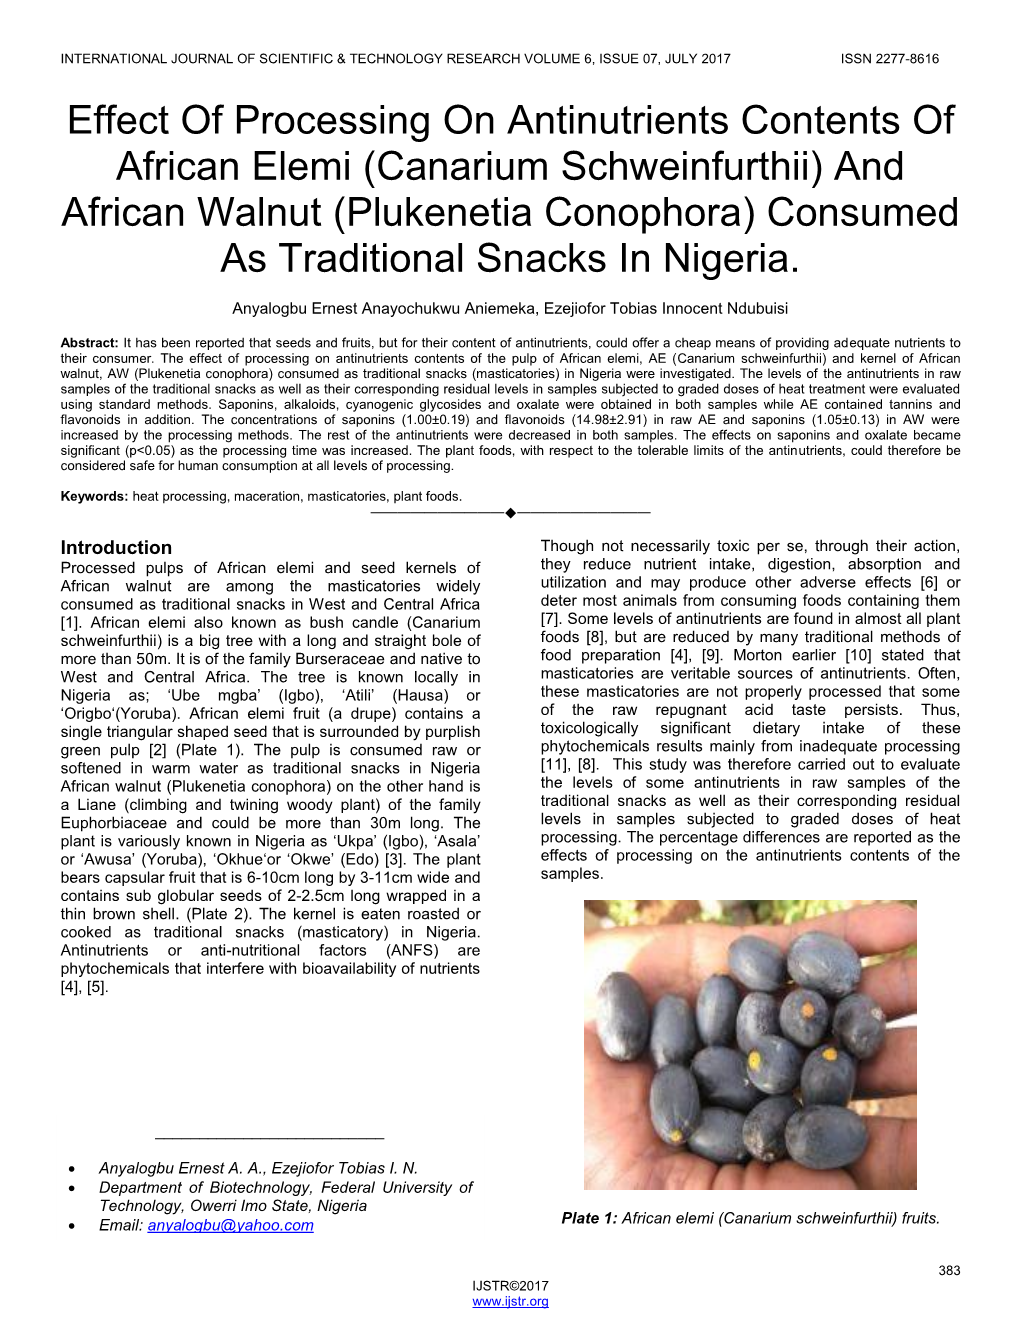 Canarium Schweinfurthii) and African Walnut (Plukenetia Conophora) Consumed As Traditional Snacks in Nigeria